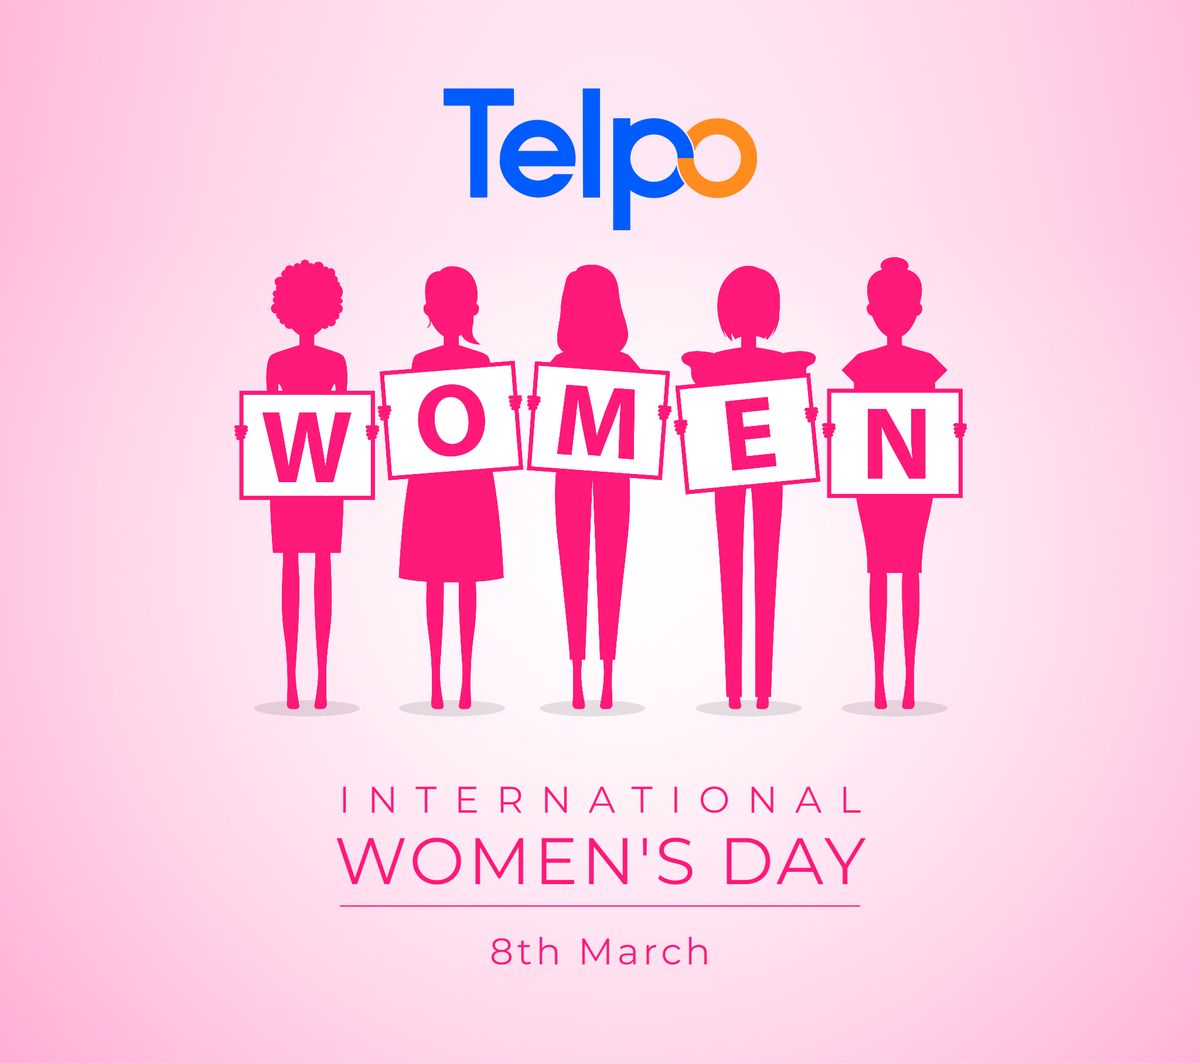 International Women's Day, Women's Day, Telpo